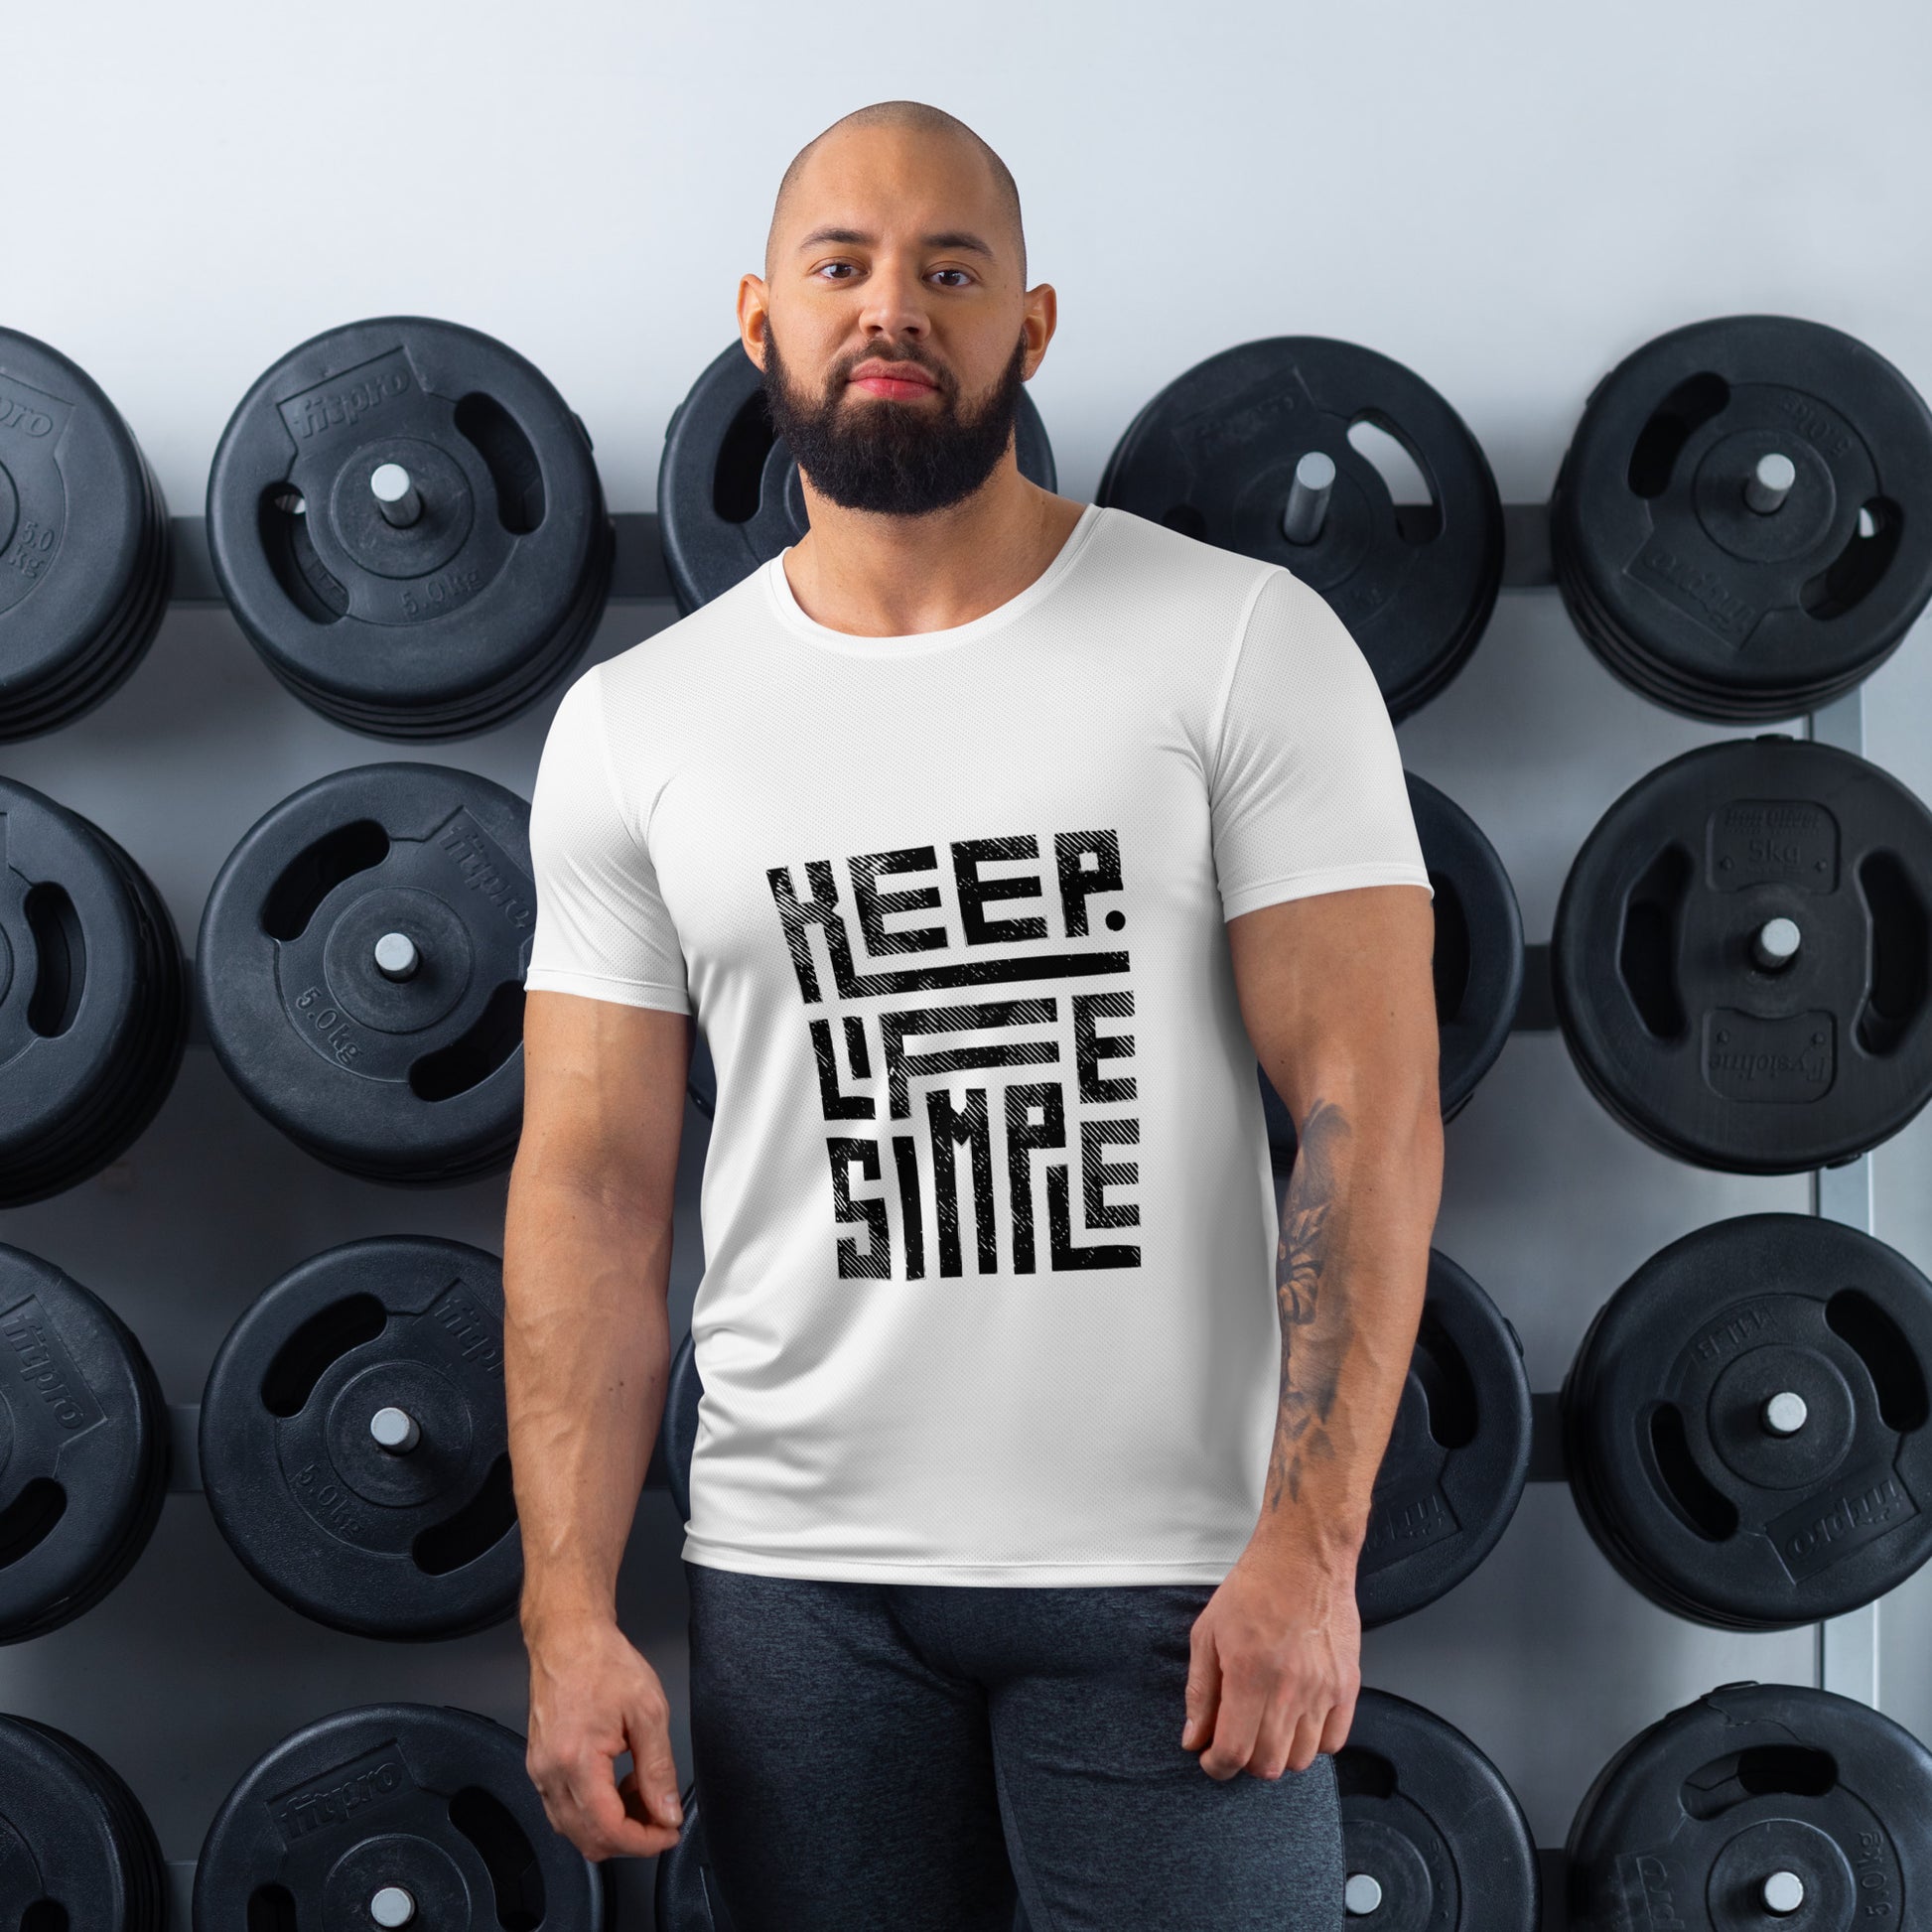 Make Life Simple Men's Athletic T-shirt